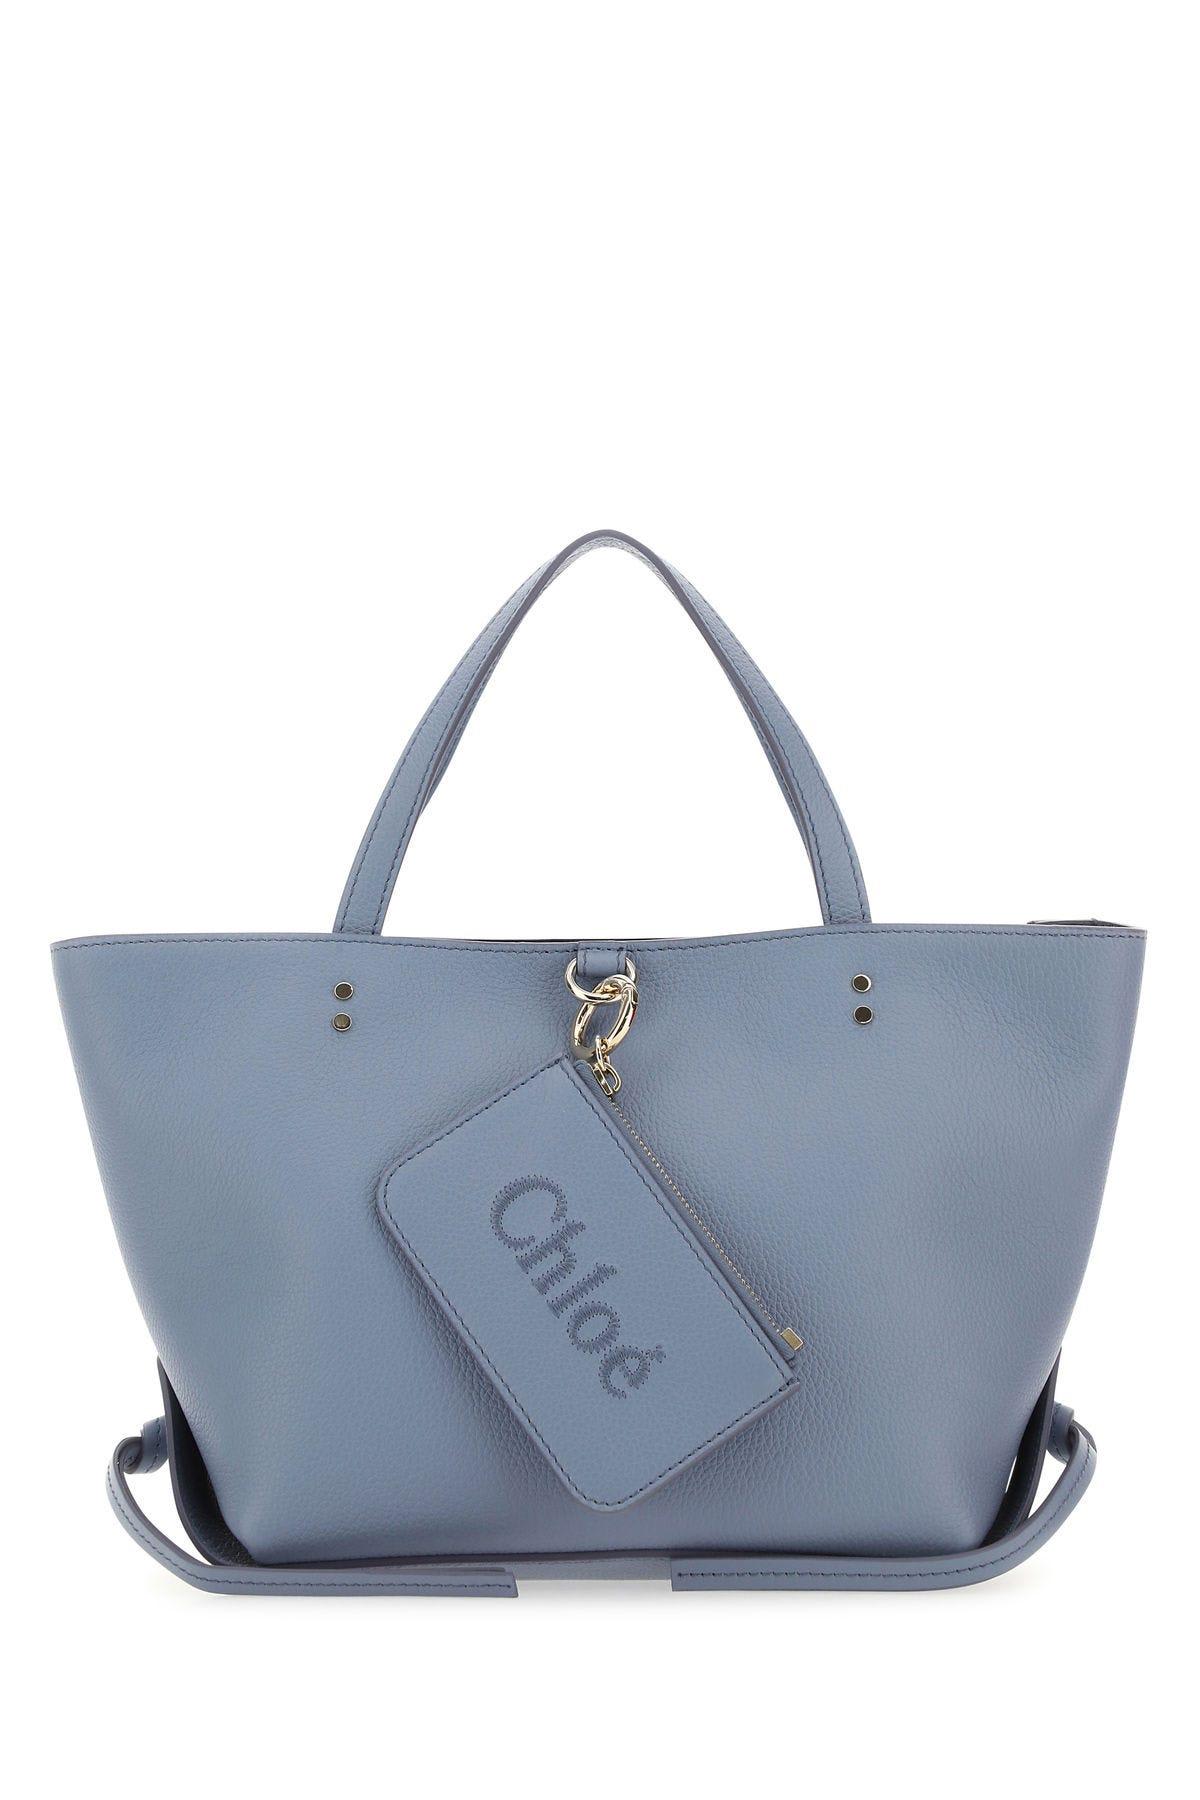 Chloé Powder Blue Leather Small Chloè Sense Handbag